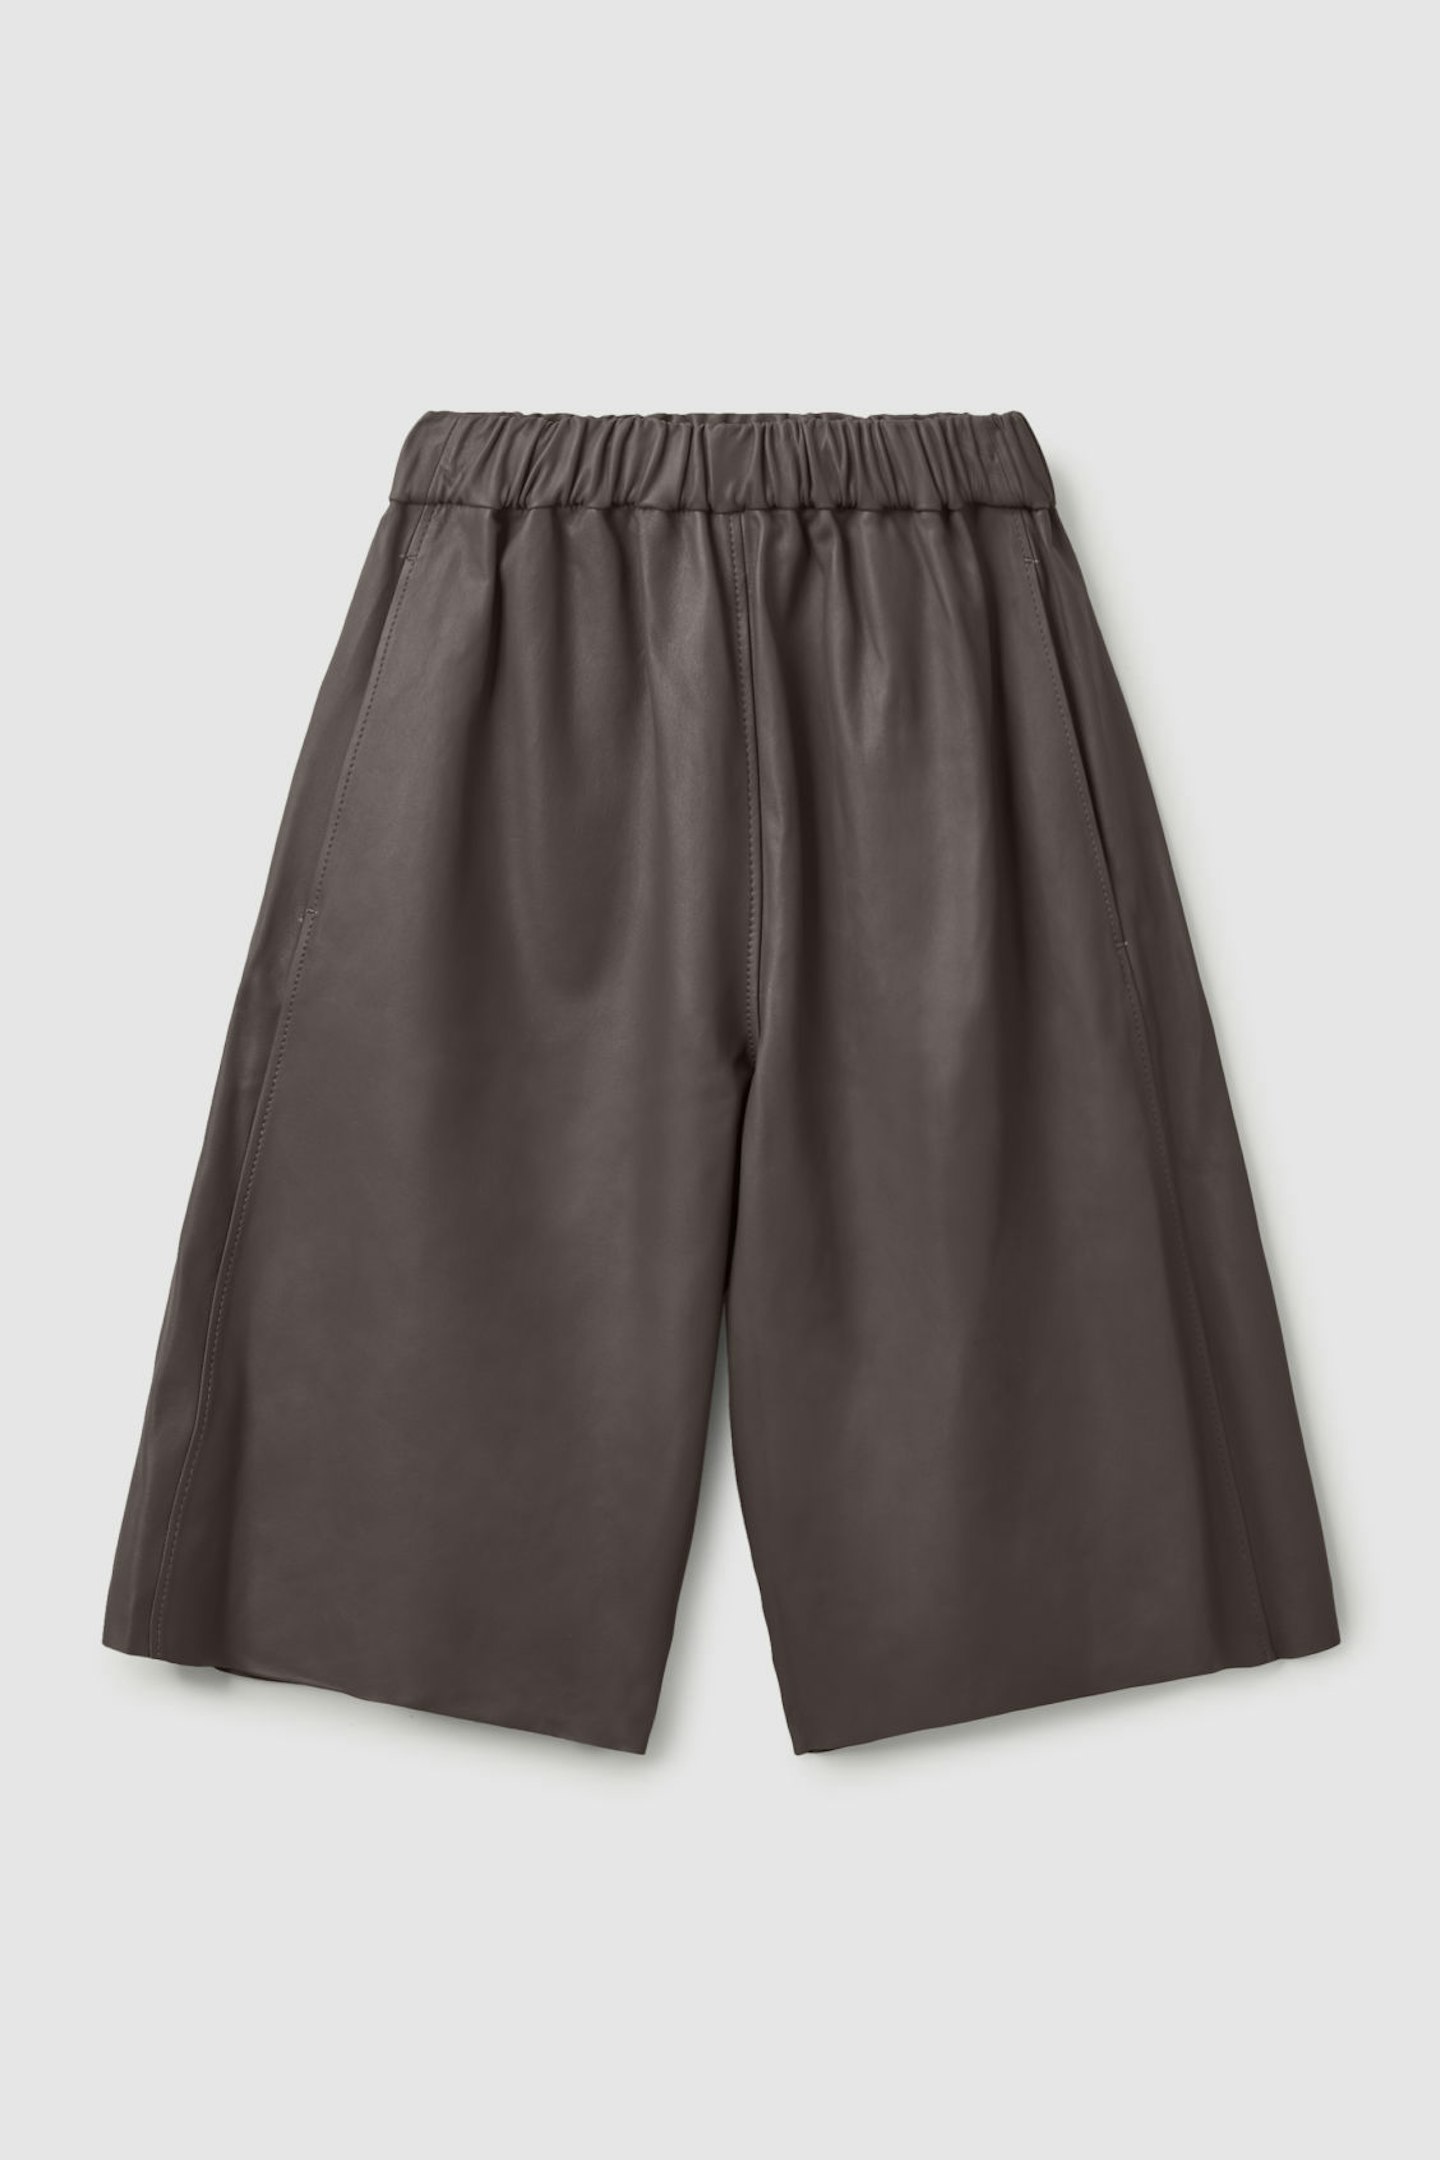 COS, Leather Bermuda Shorts, £225